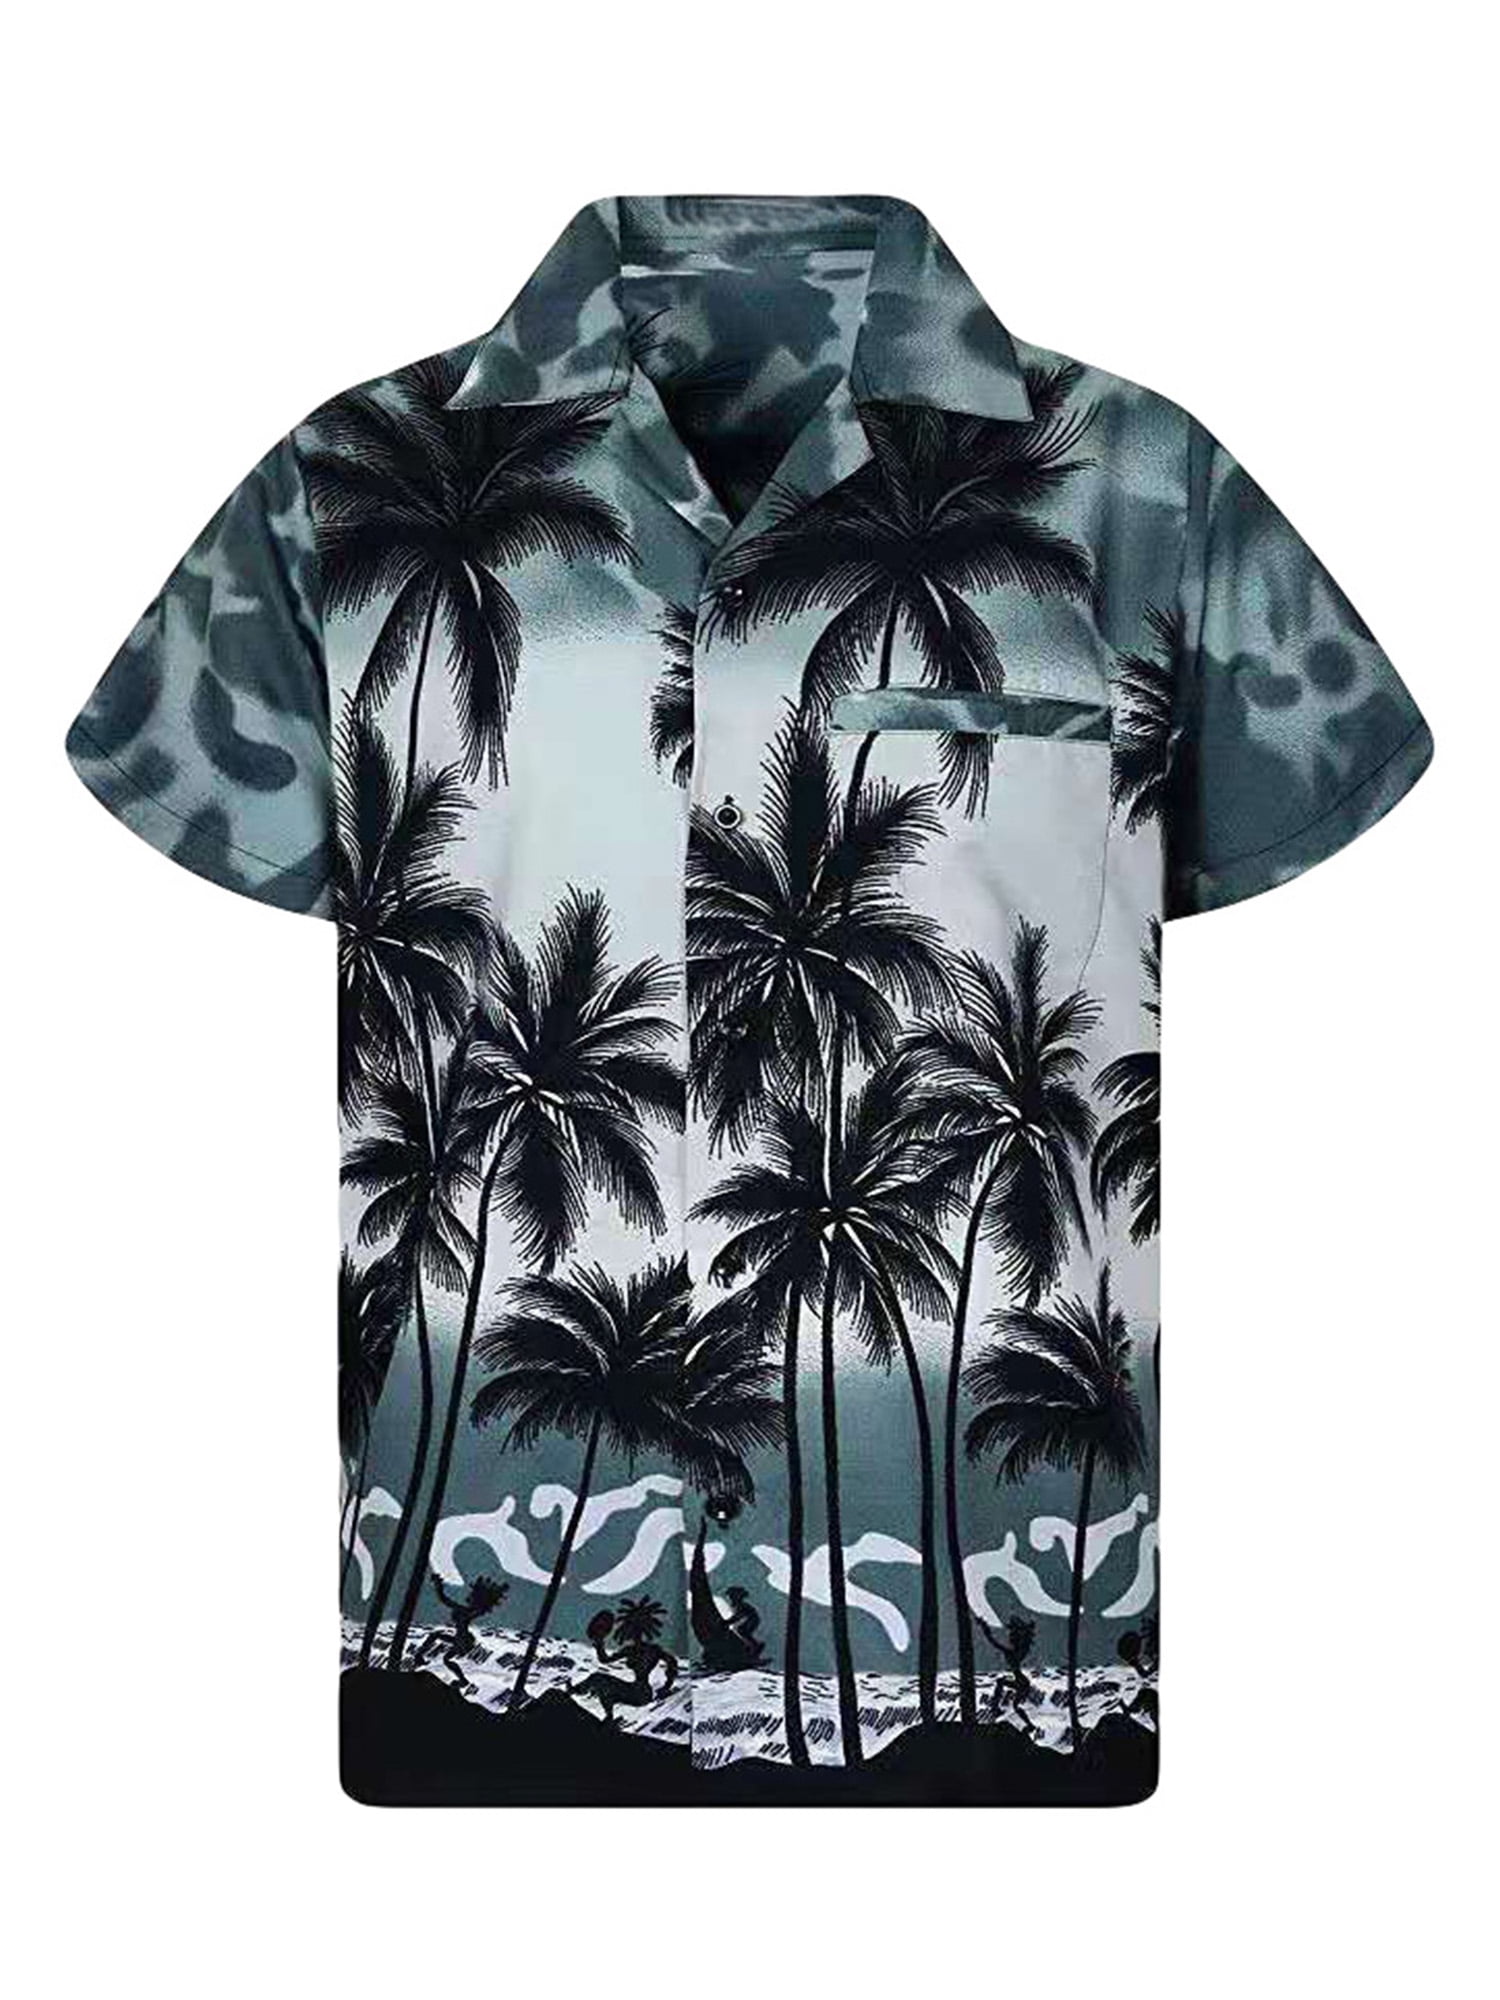 Mens Summer Shirt Casual Button Down Short Sleeve Beach Shirts 